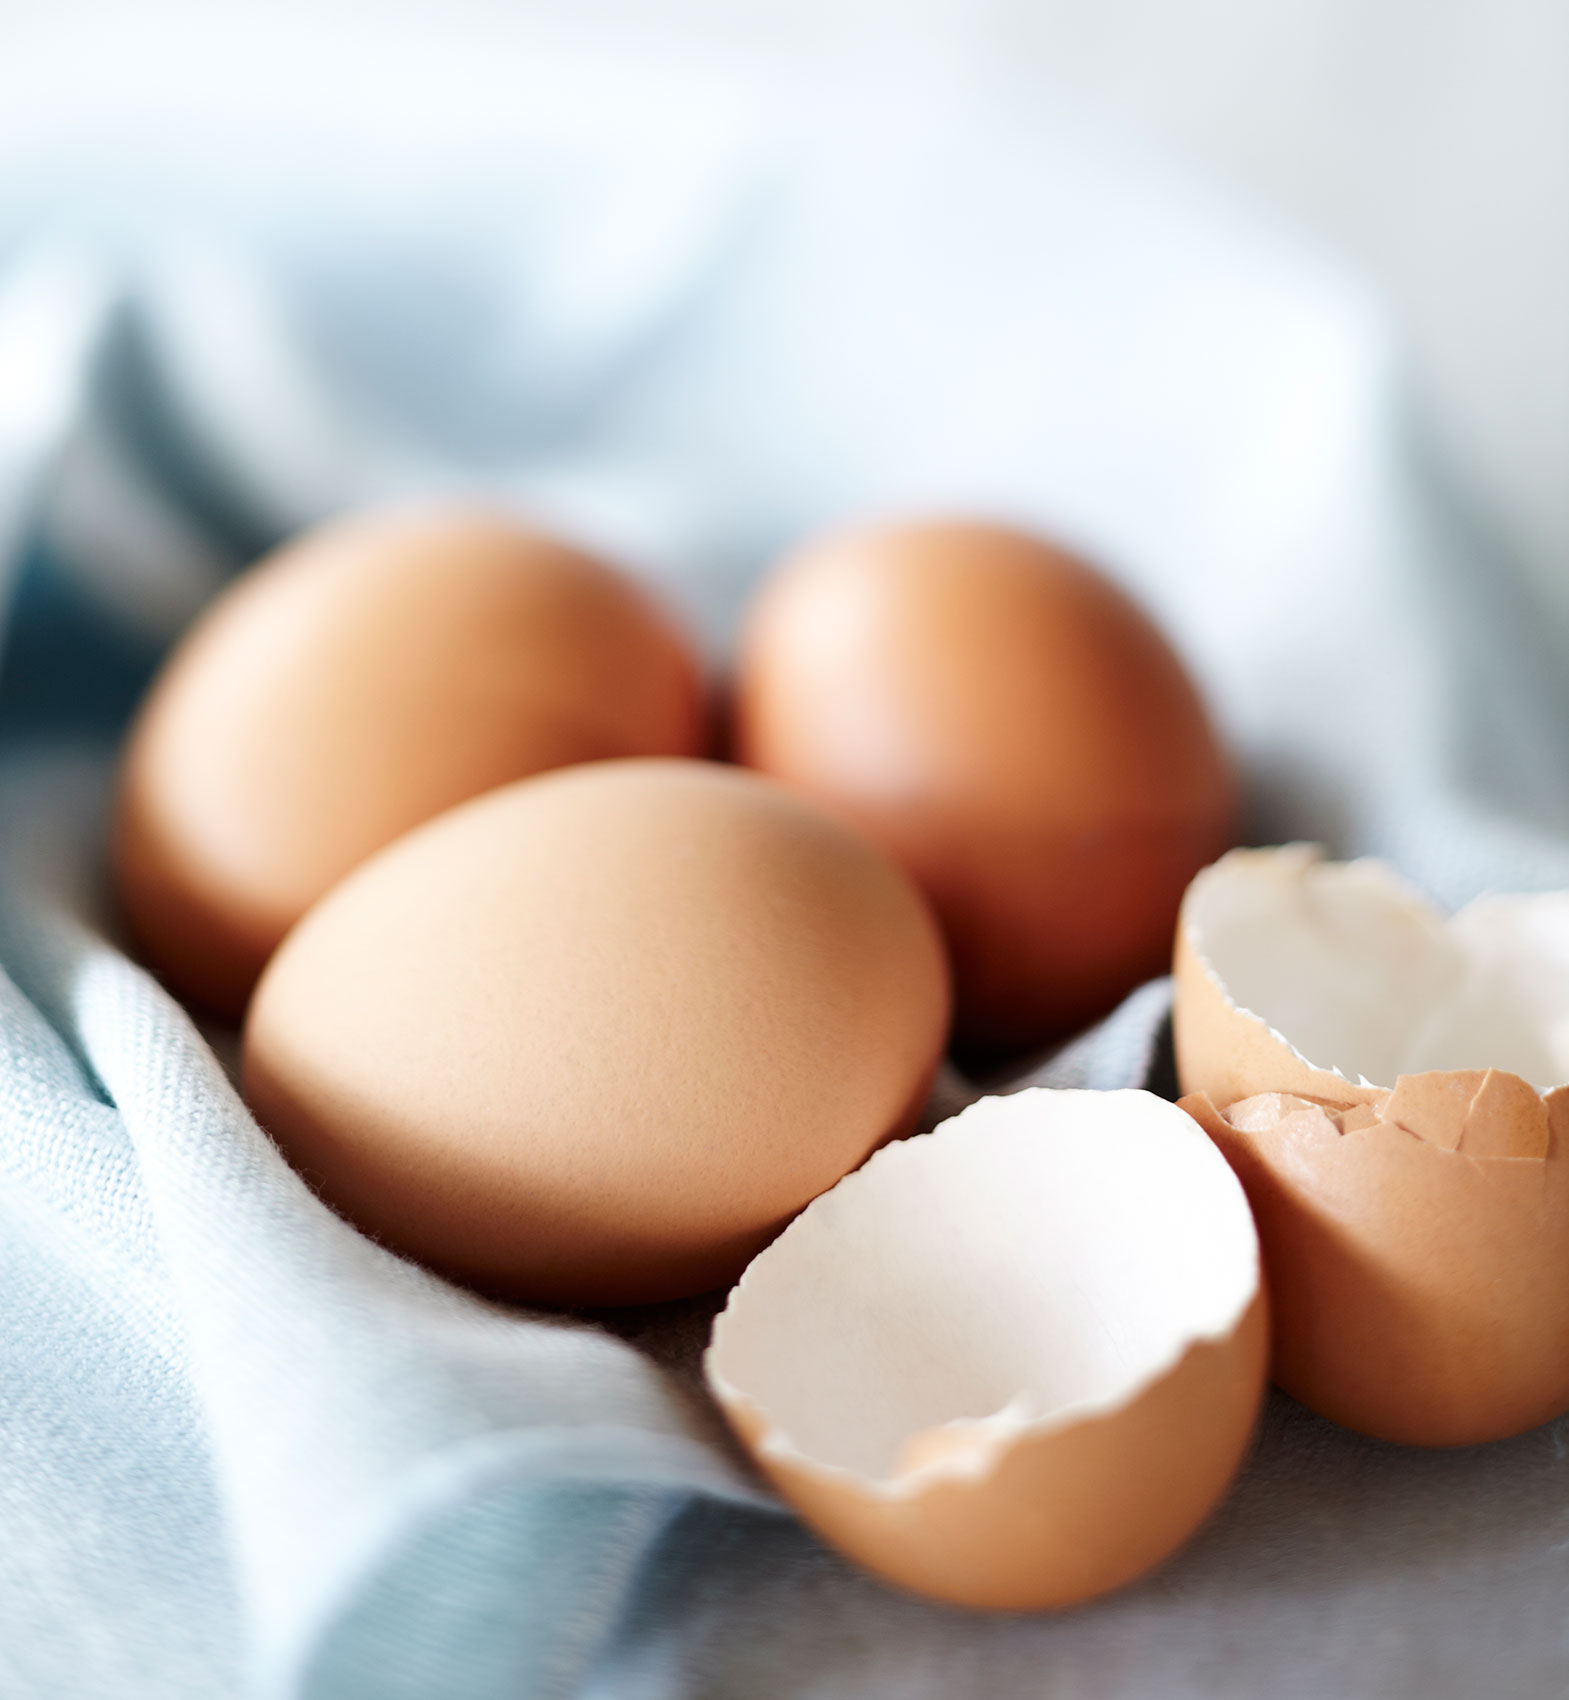 Everyday • Half Dozen Fresh Brown Eggs on Tea Towel in Kitchen • Hospitality & Editorial Food Photography